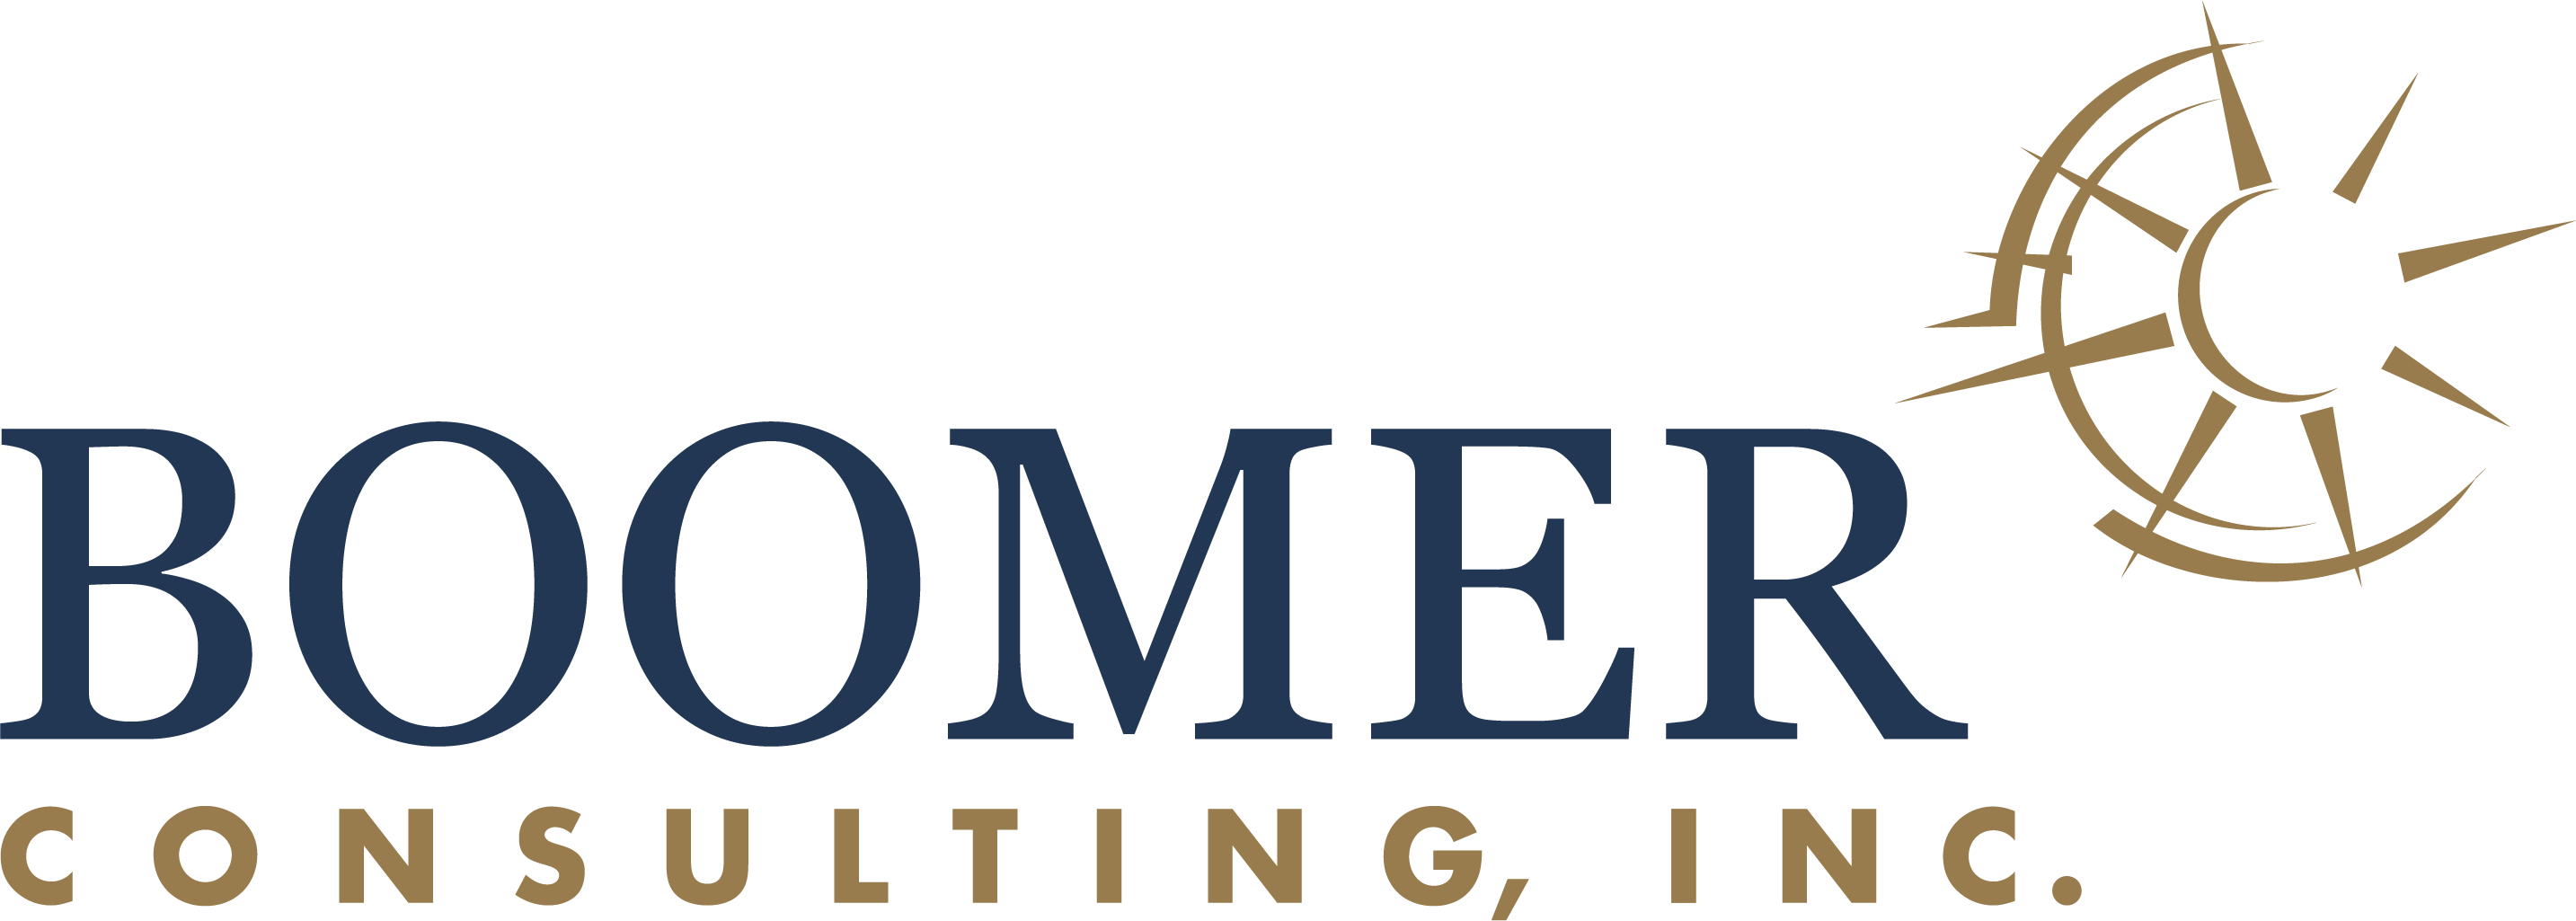 Boomer Consulting, Inc. logo